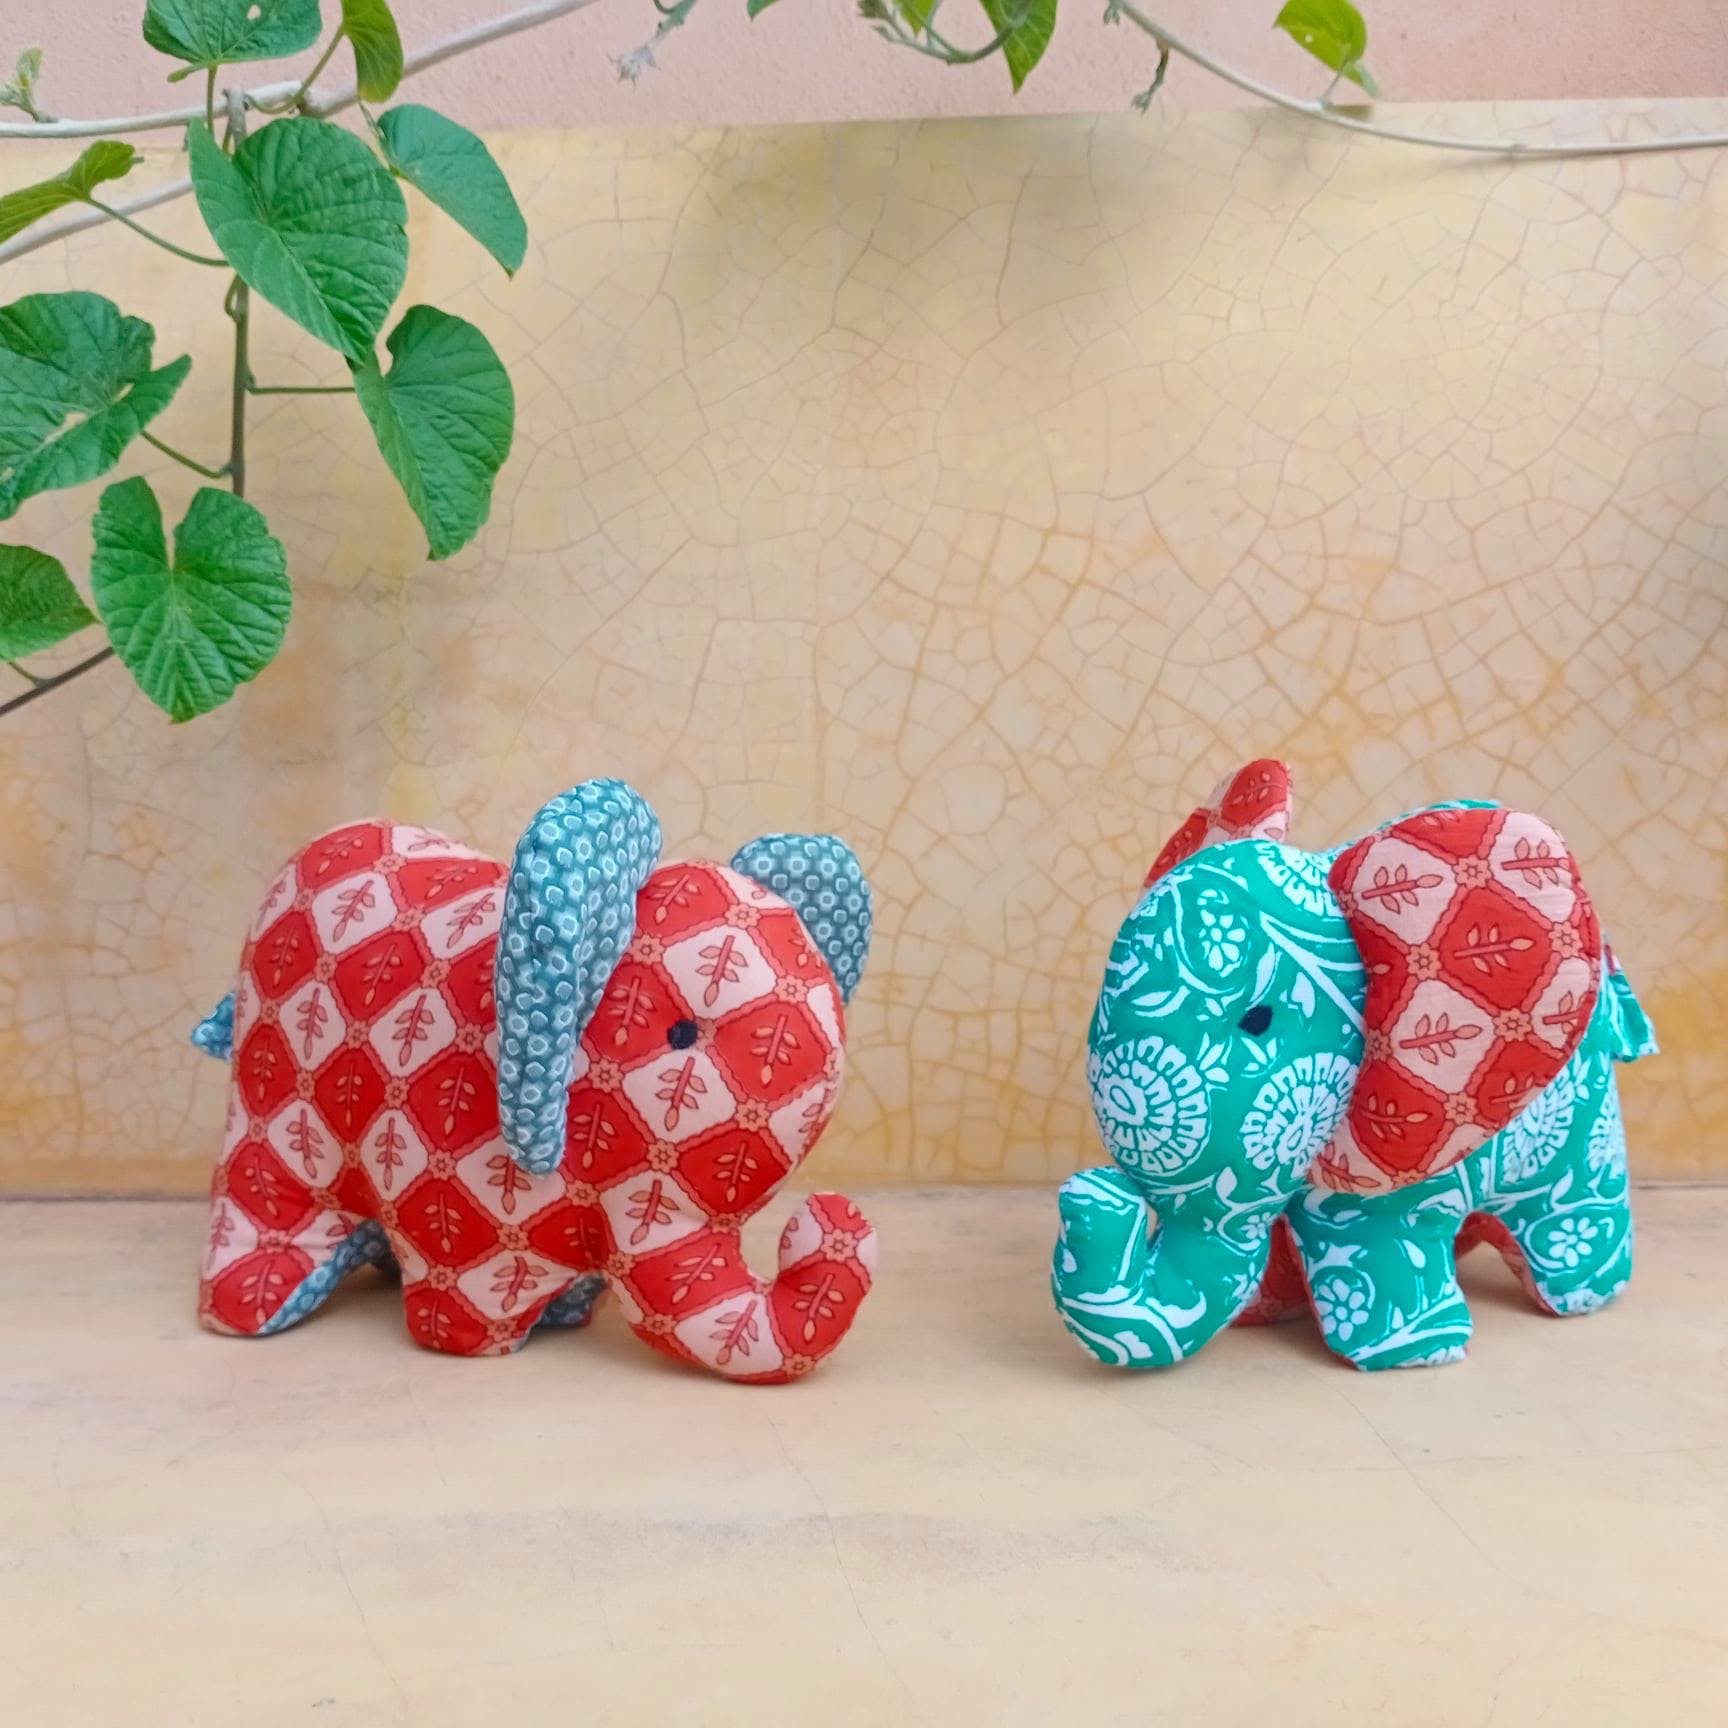 Elephant,Toy,Elephants and Mammoths,Indian elephant,Creative arts,Animal figure,Stuffed toy